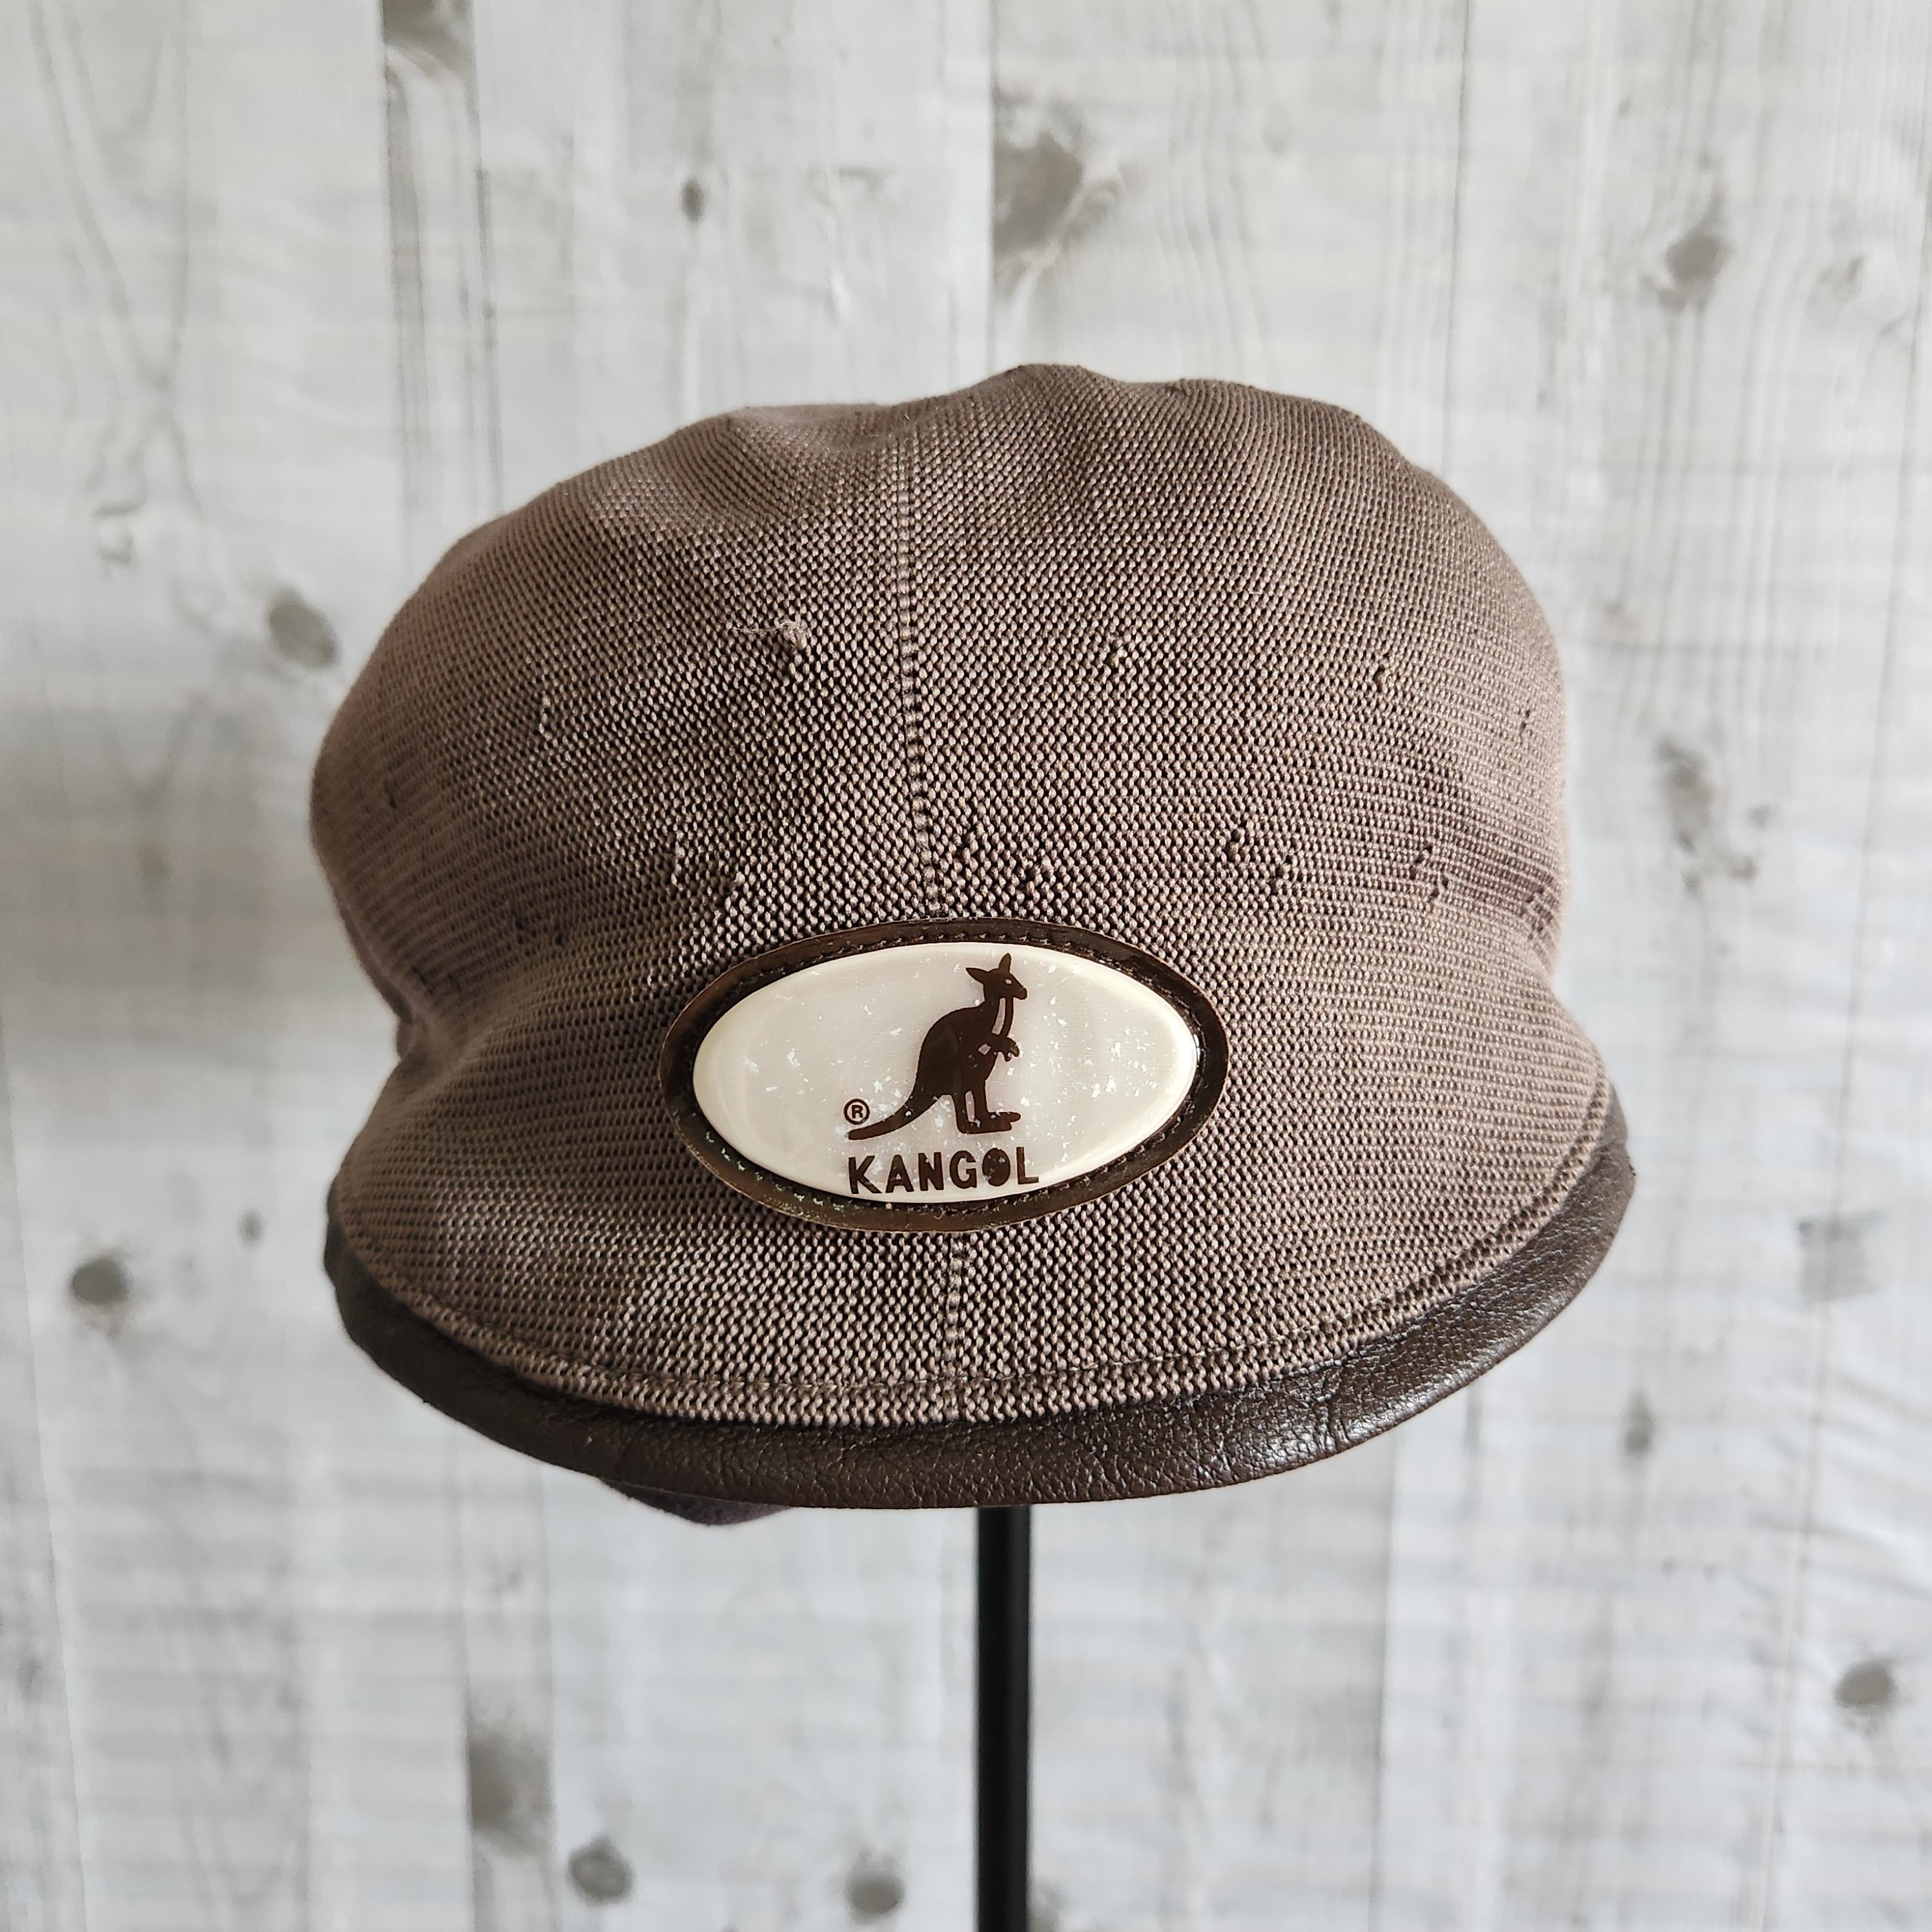 Vintage Kangol Ivy Cap / Flat Cap Size Large - 7